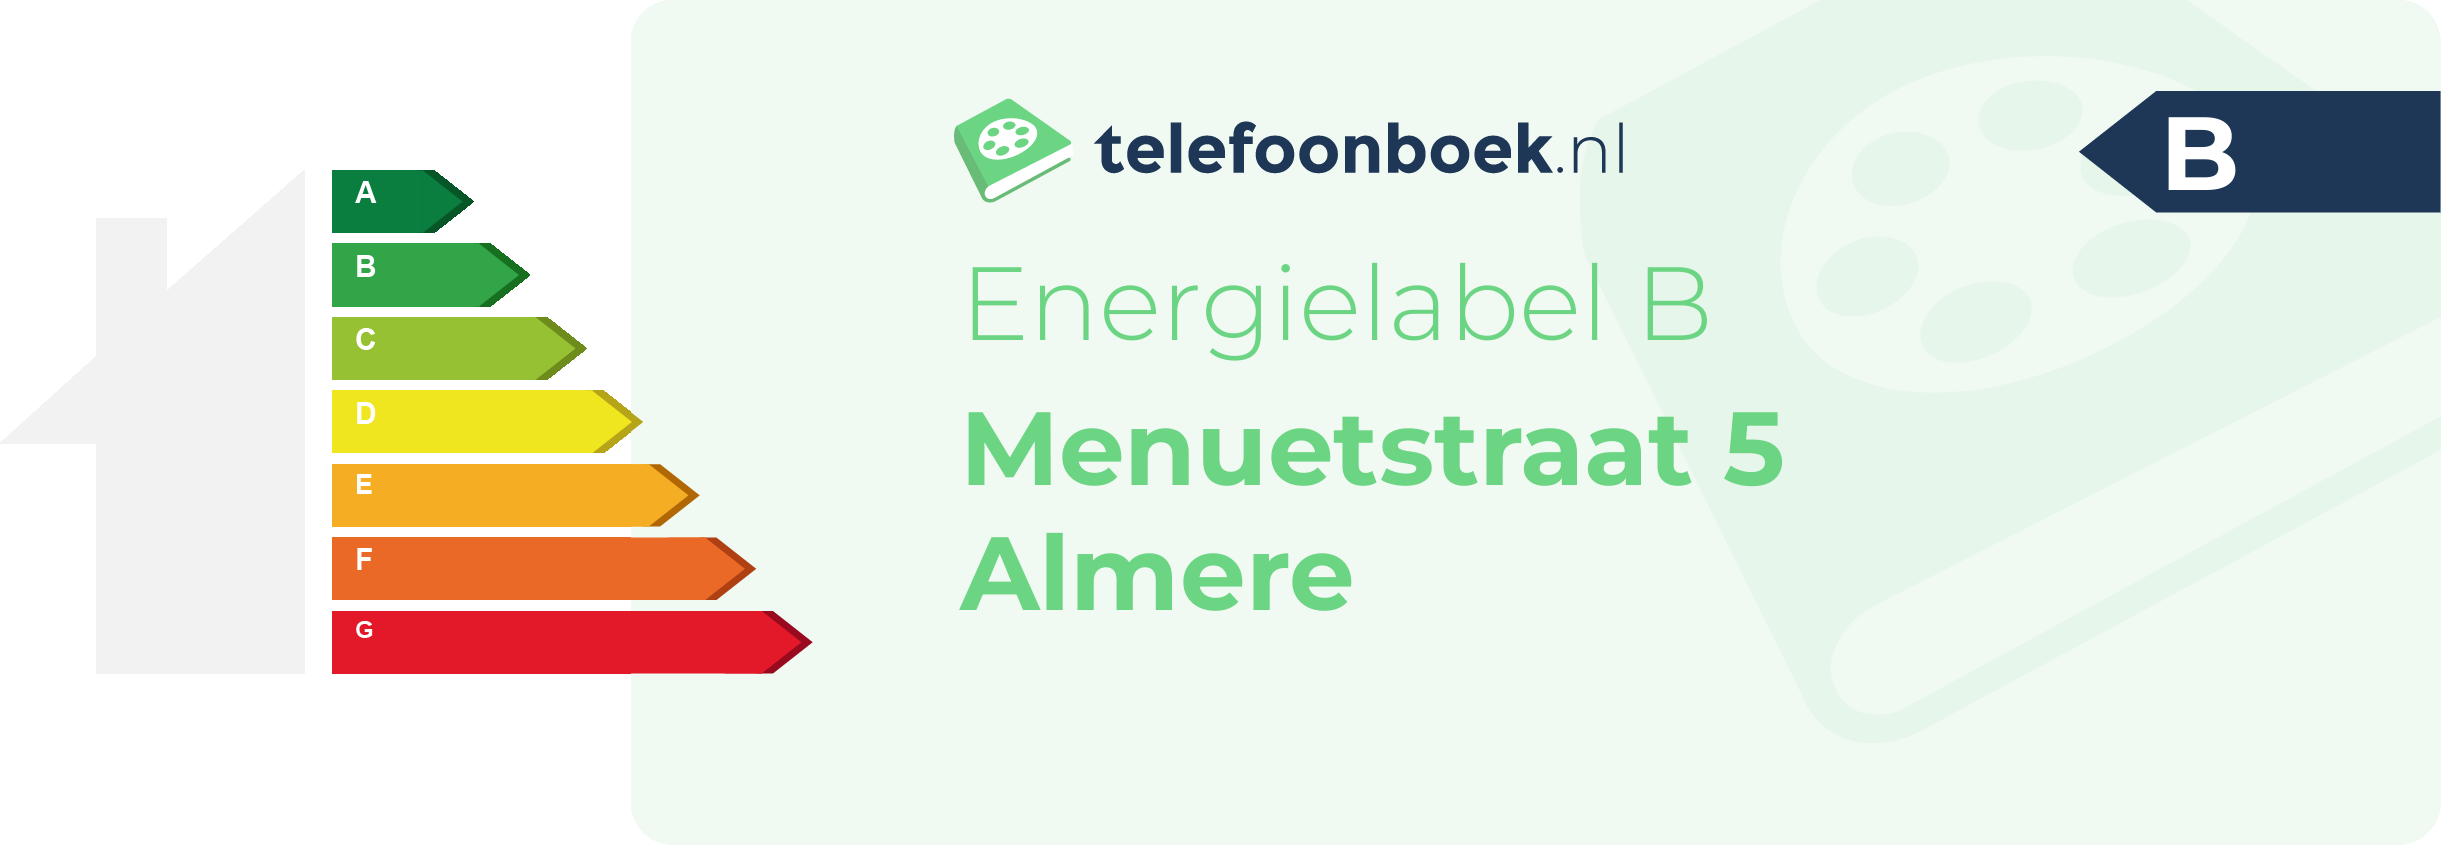 Energielabel Menuetstraat 5 Almere